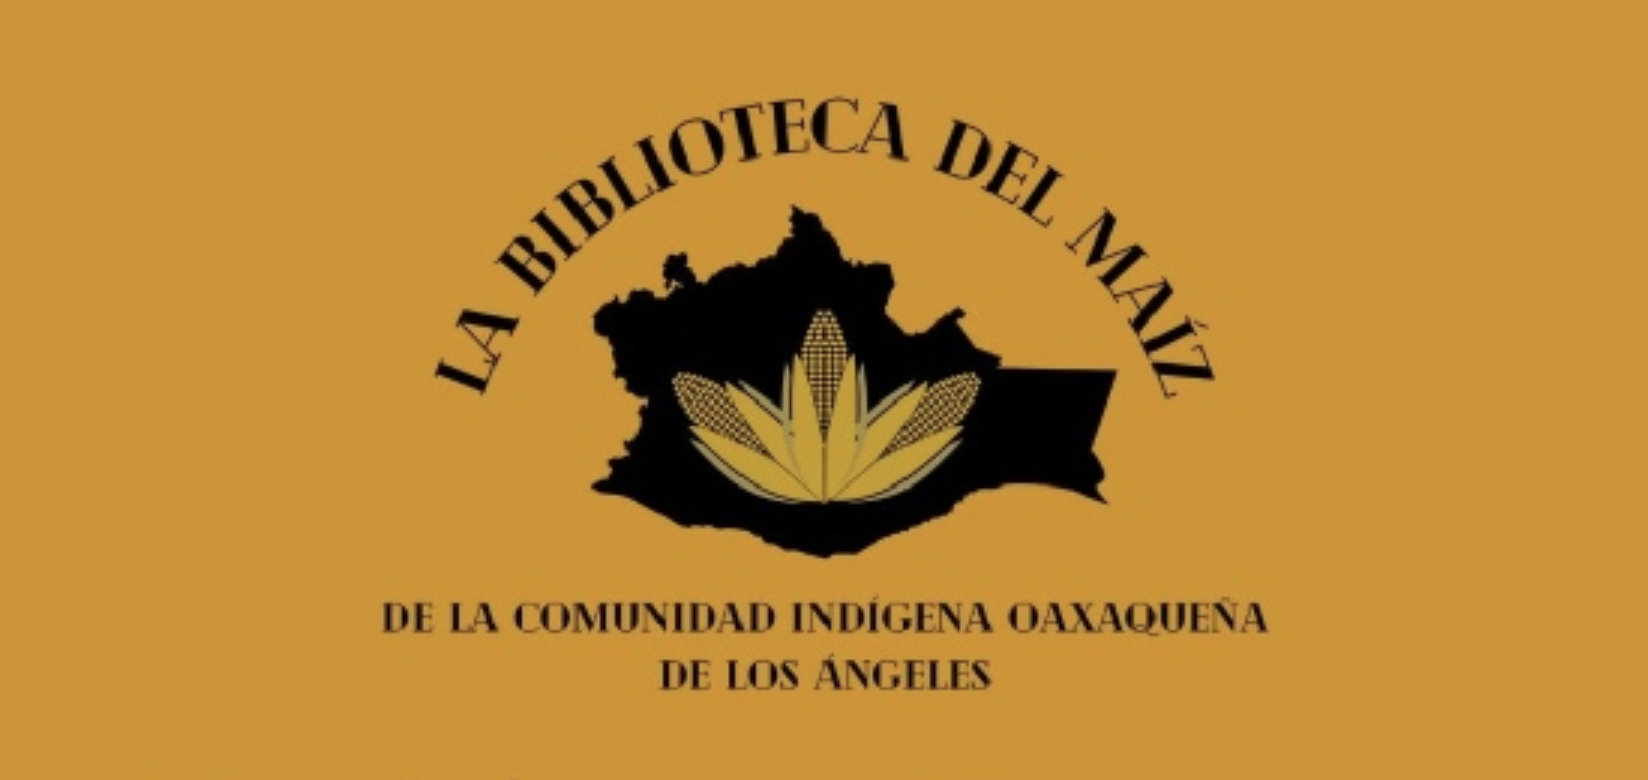 La Biblioteca del maíz logo in black over a yellow background